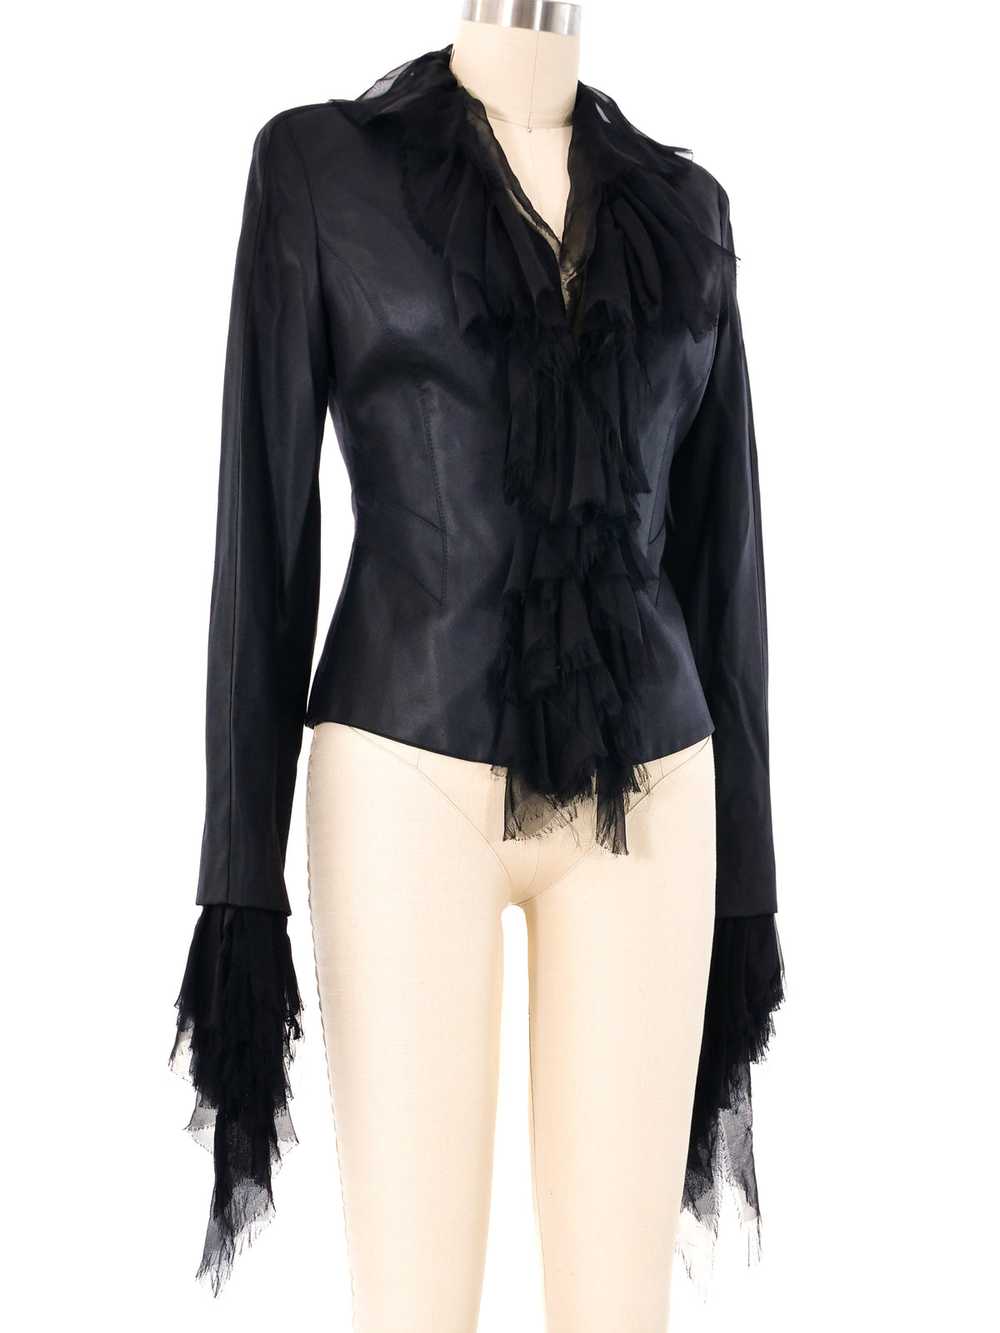 Gianni Versace Ruffle Trimmed Jacket - image 3